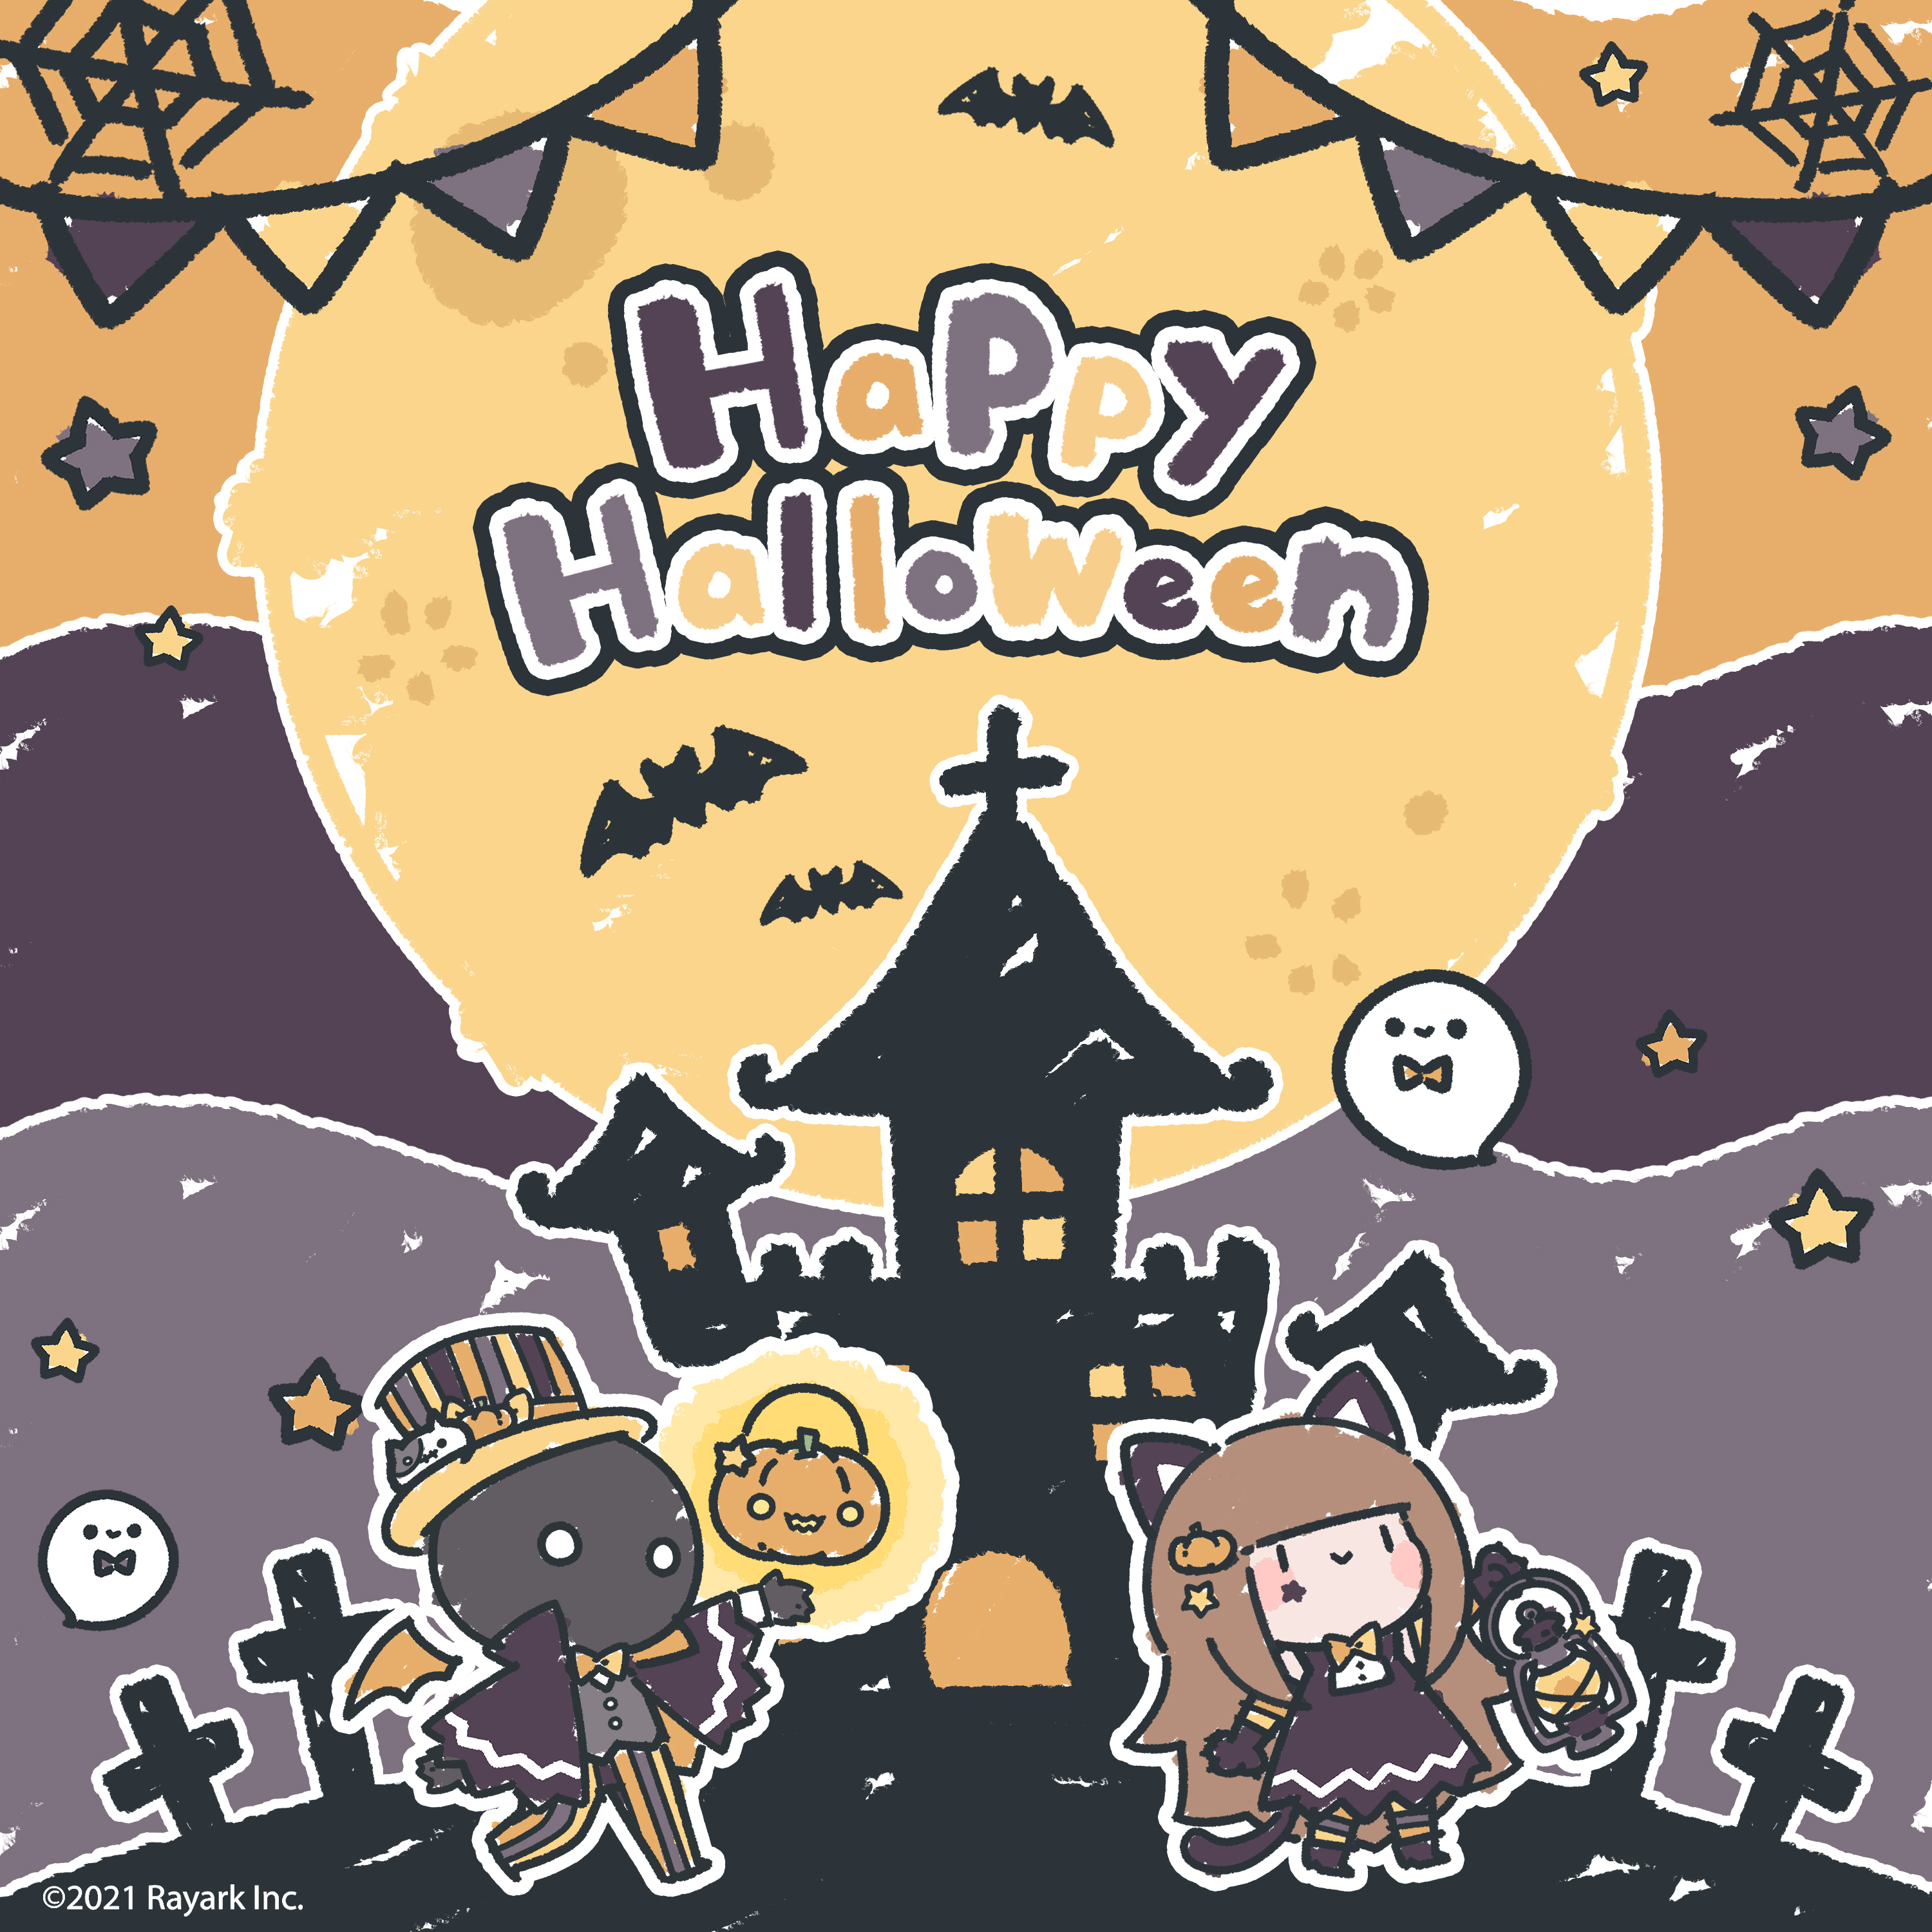 🎃🎃 Happy Halloween 🎃🎃